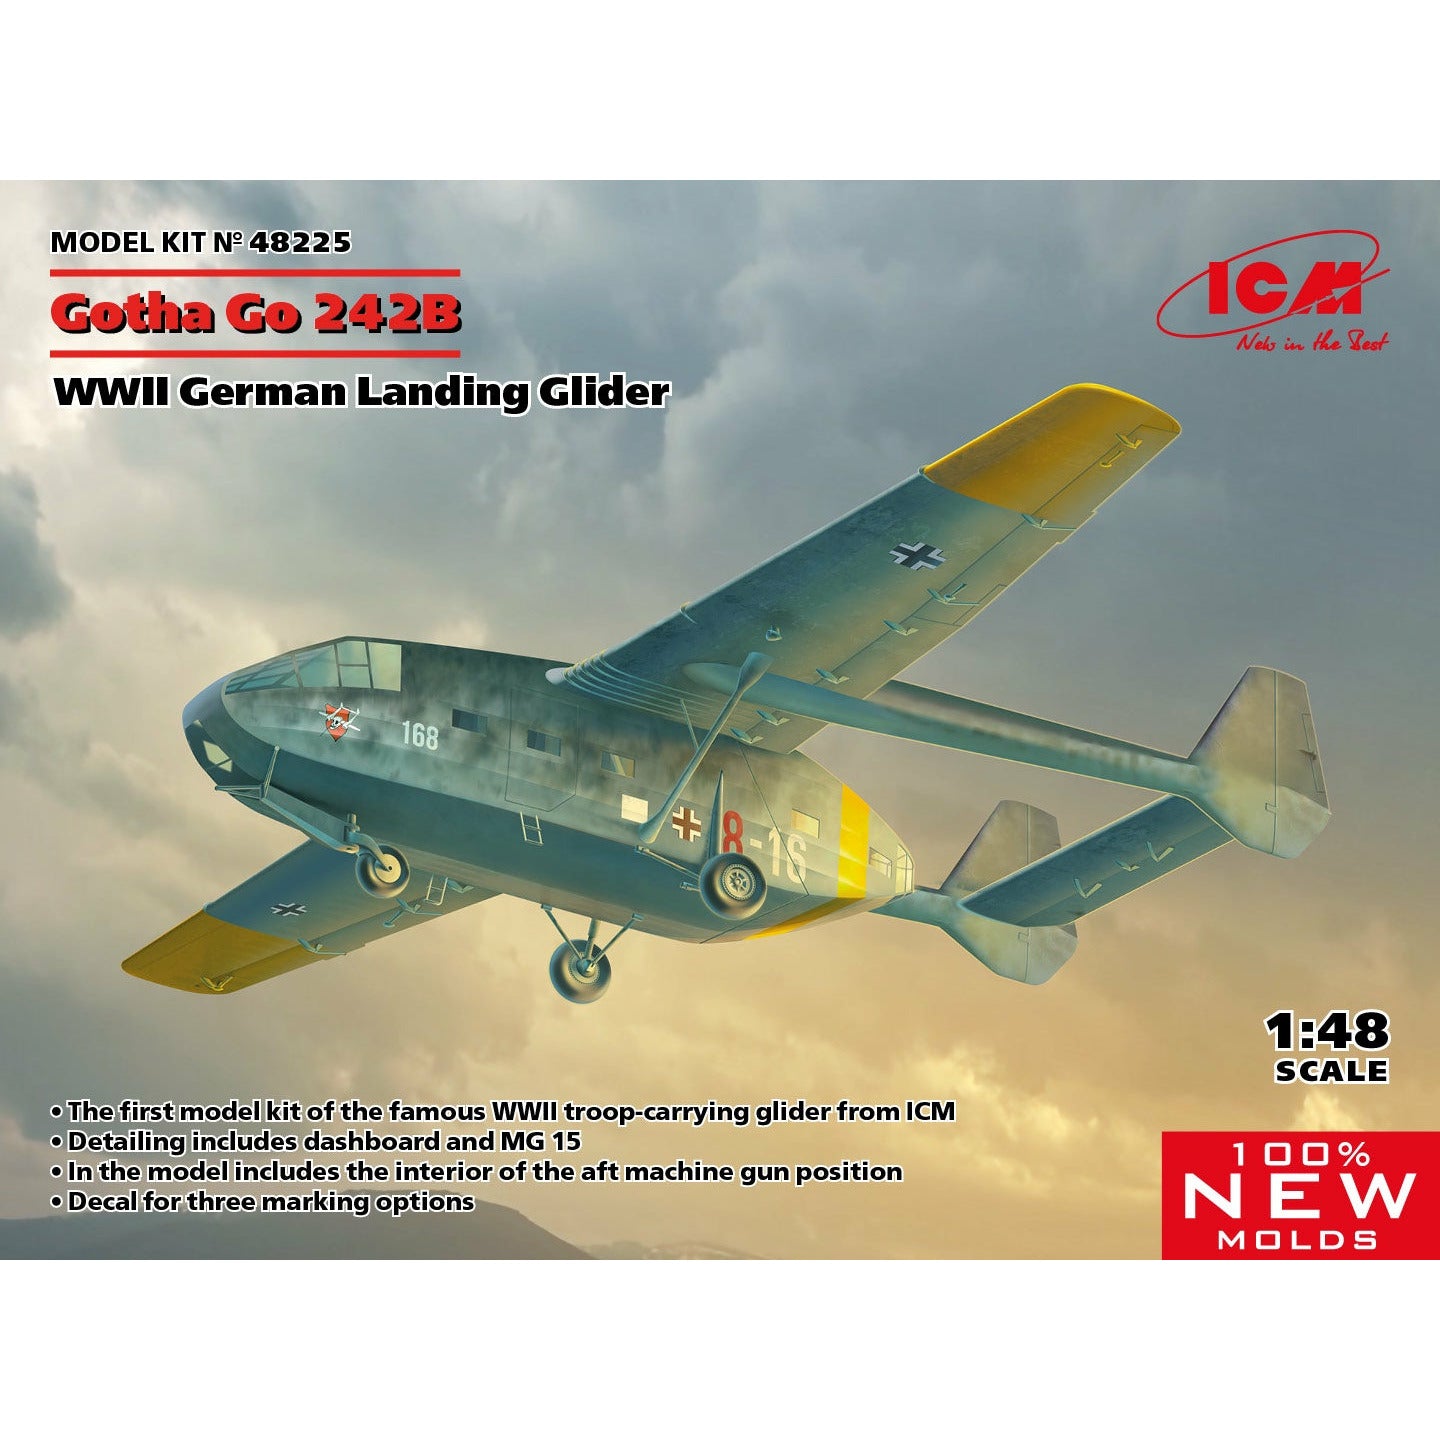 Gotha Go 242B, WWII German Landing Glider (100% New Molds) 1/48 #48225 by ICM